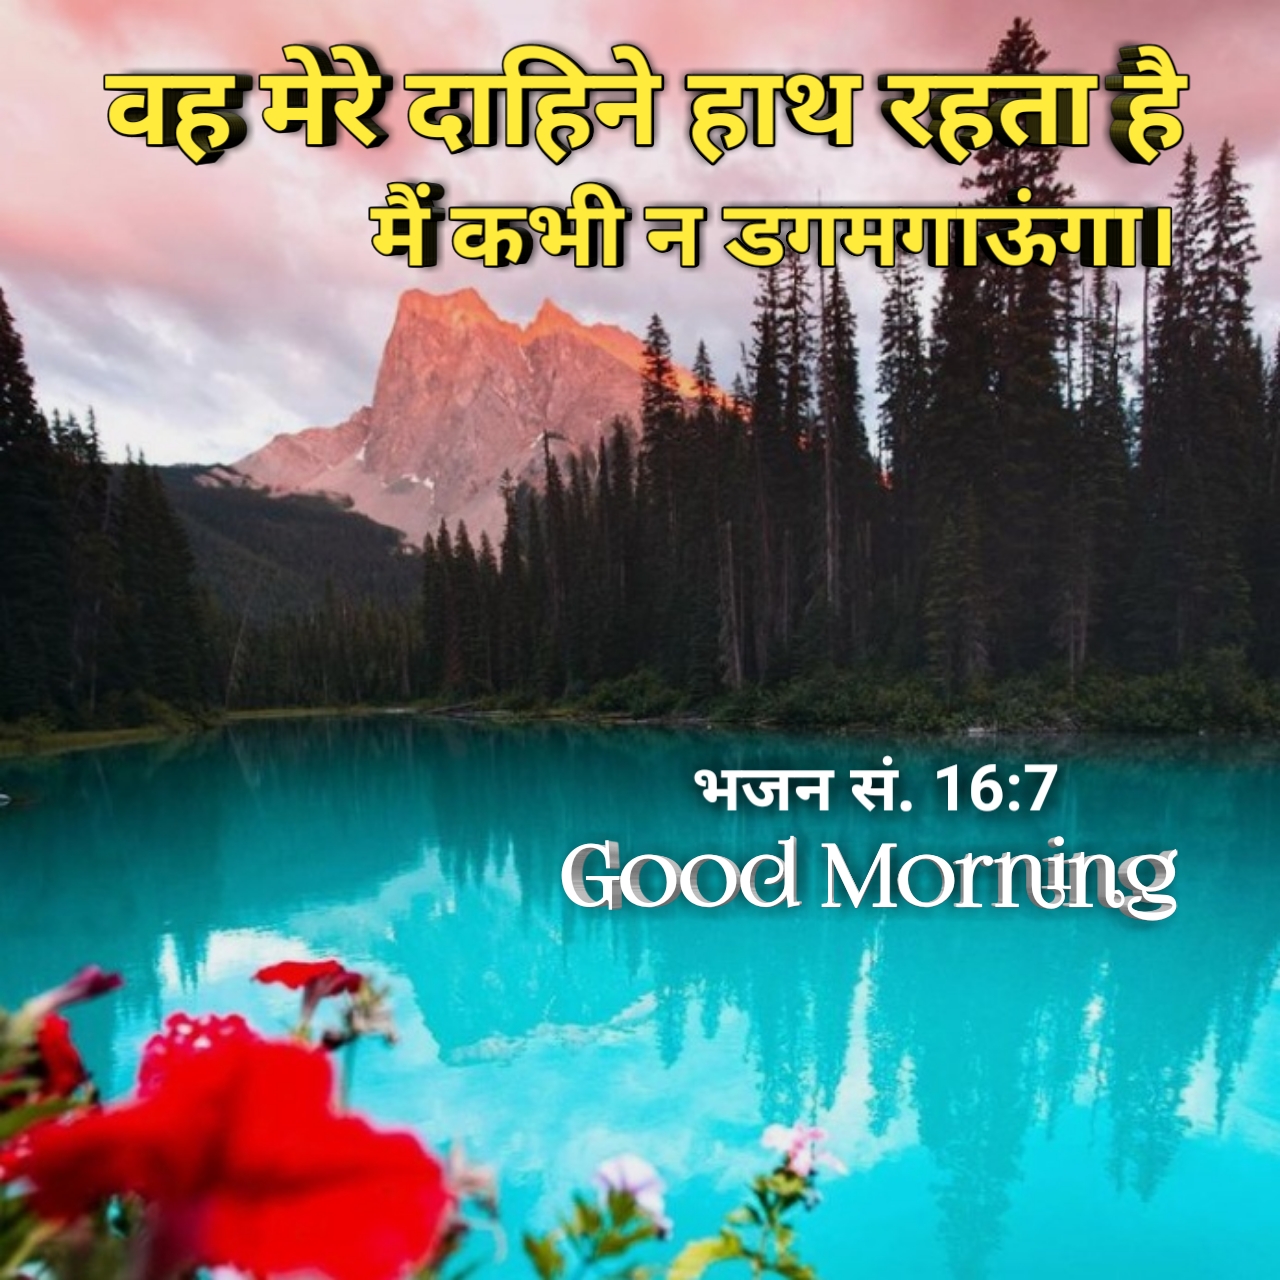 हिन्दी बाइबल वर्सेज इमेजेस | Good Morning Images with Bible Verses in Hindi